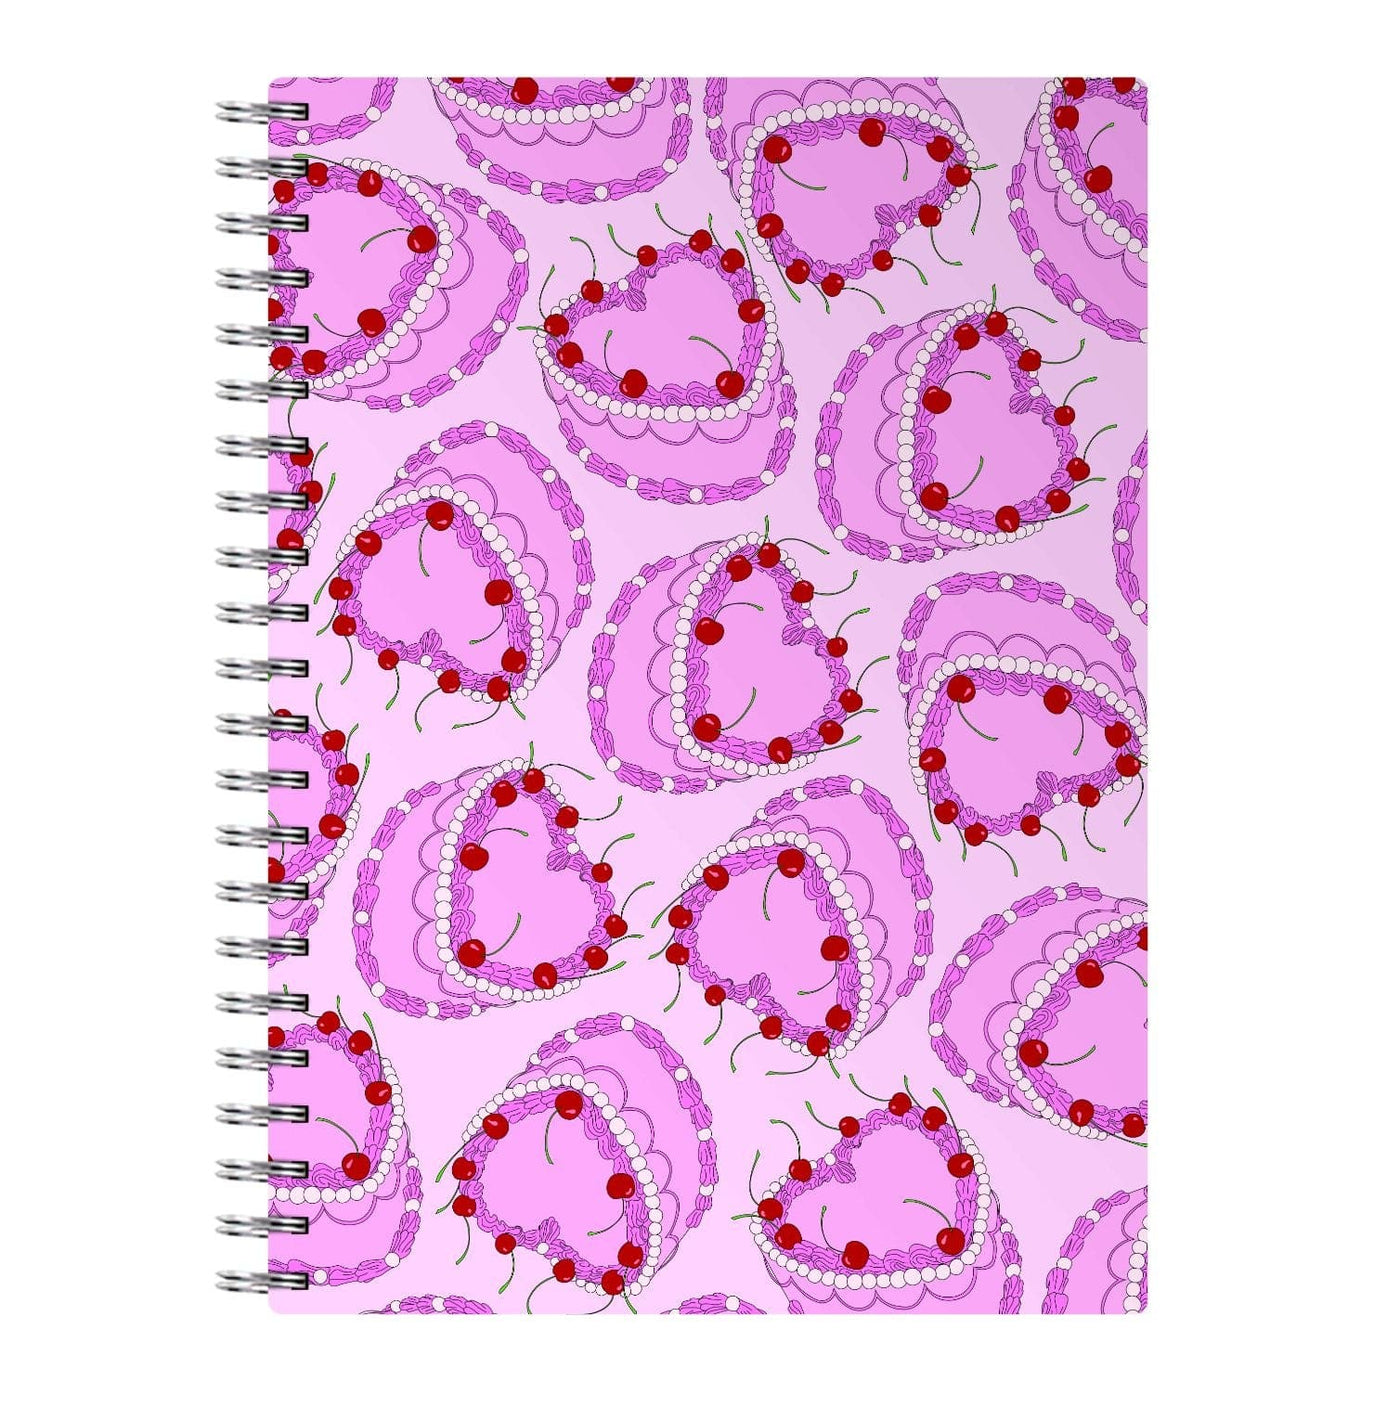 Cakes - Valentine's Day Notebook